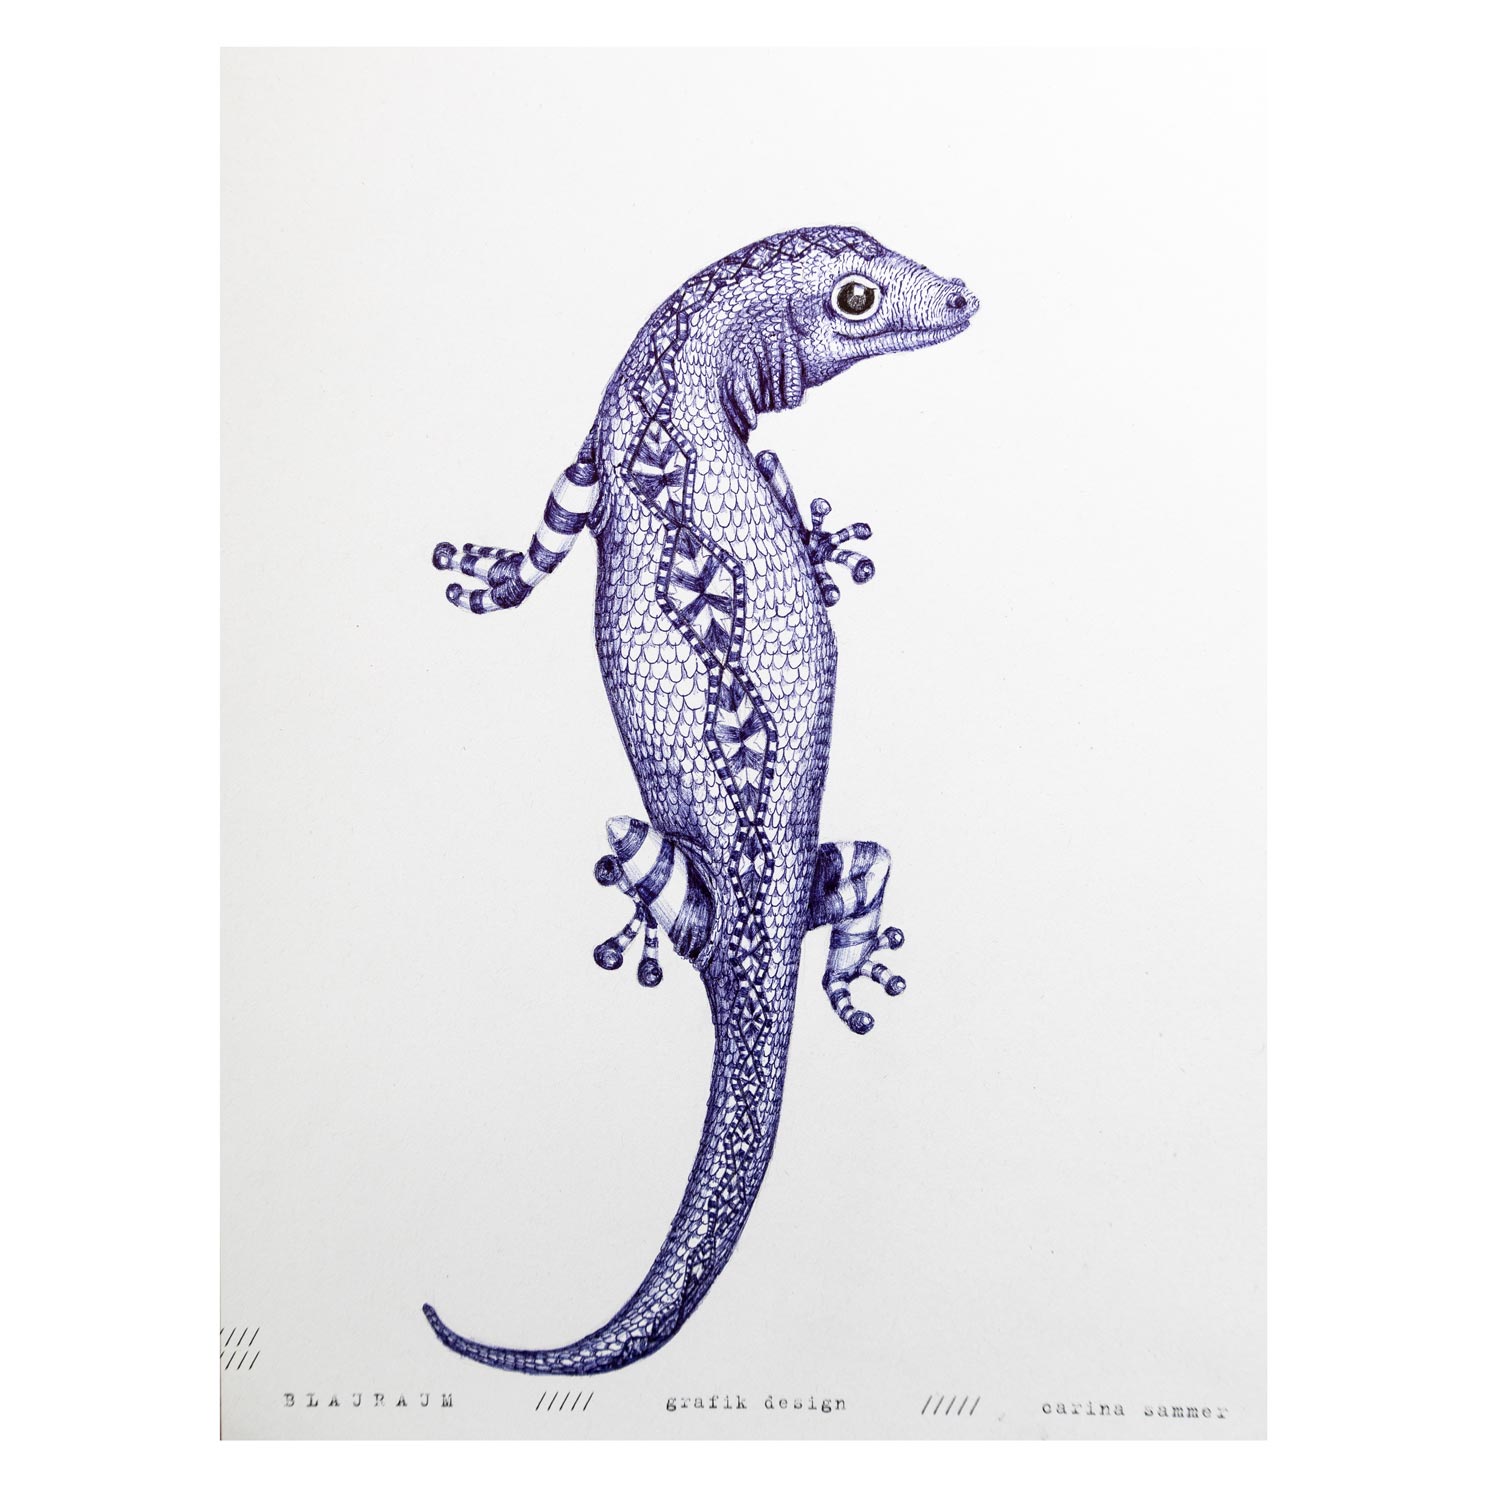 Kullitiere, Gecko, Illustration, Zeichnung, detail, Salamander, Reptil, Kugelschreiber, blau, Schuppen, Muster, Tier